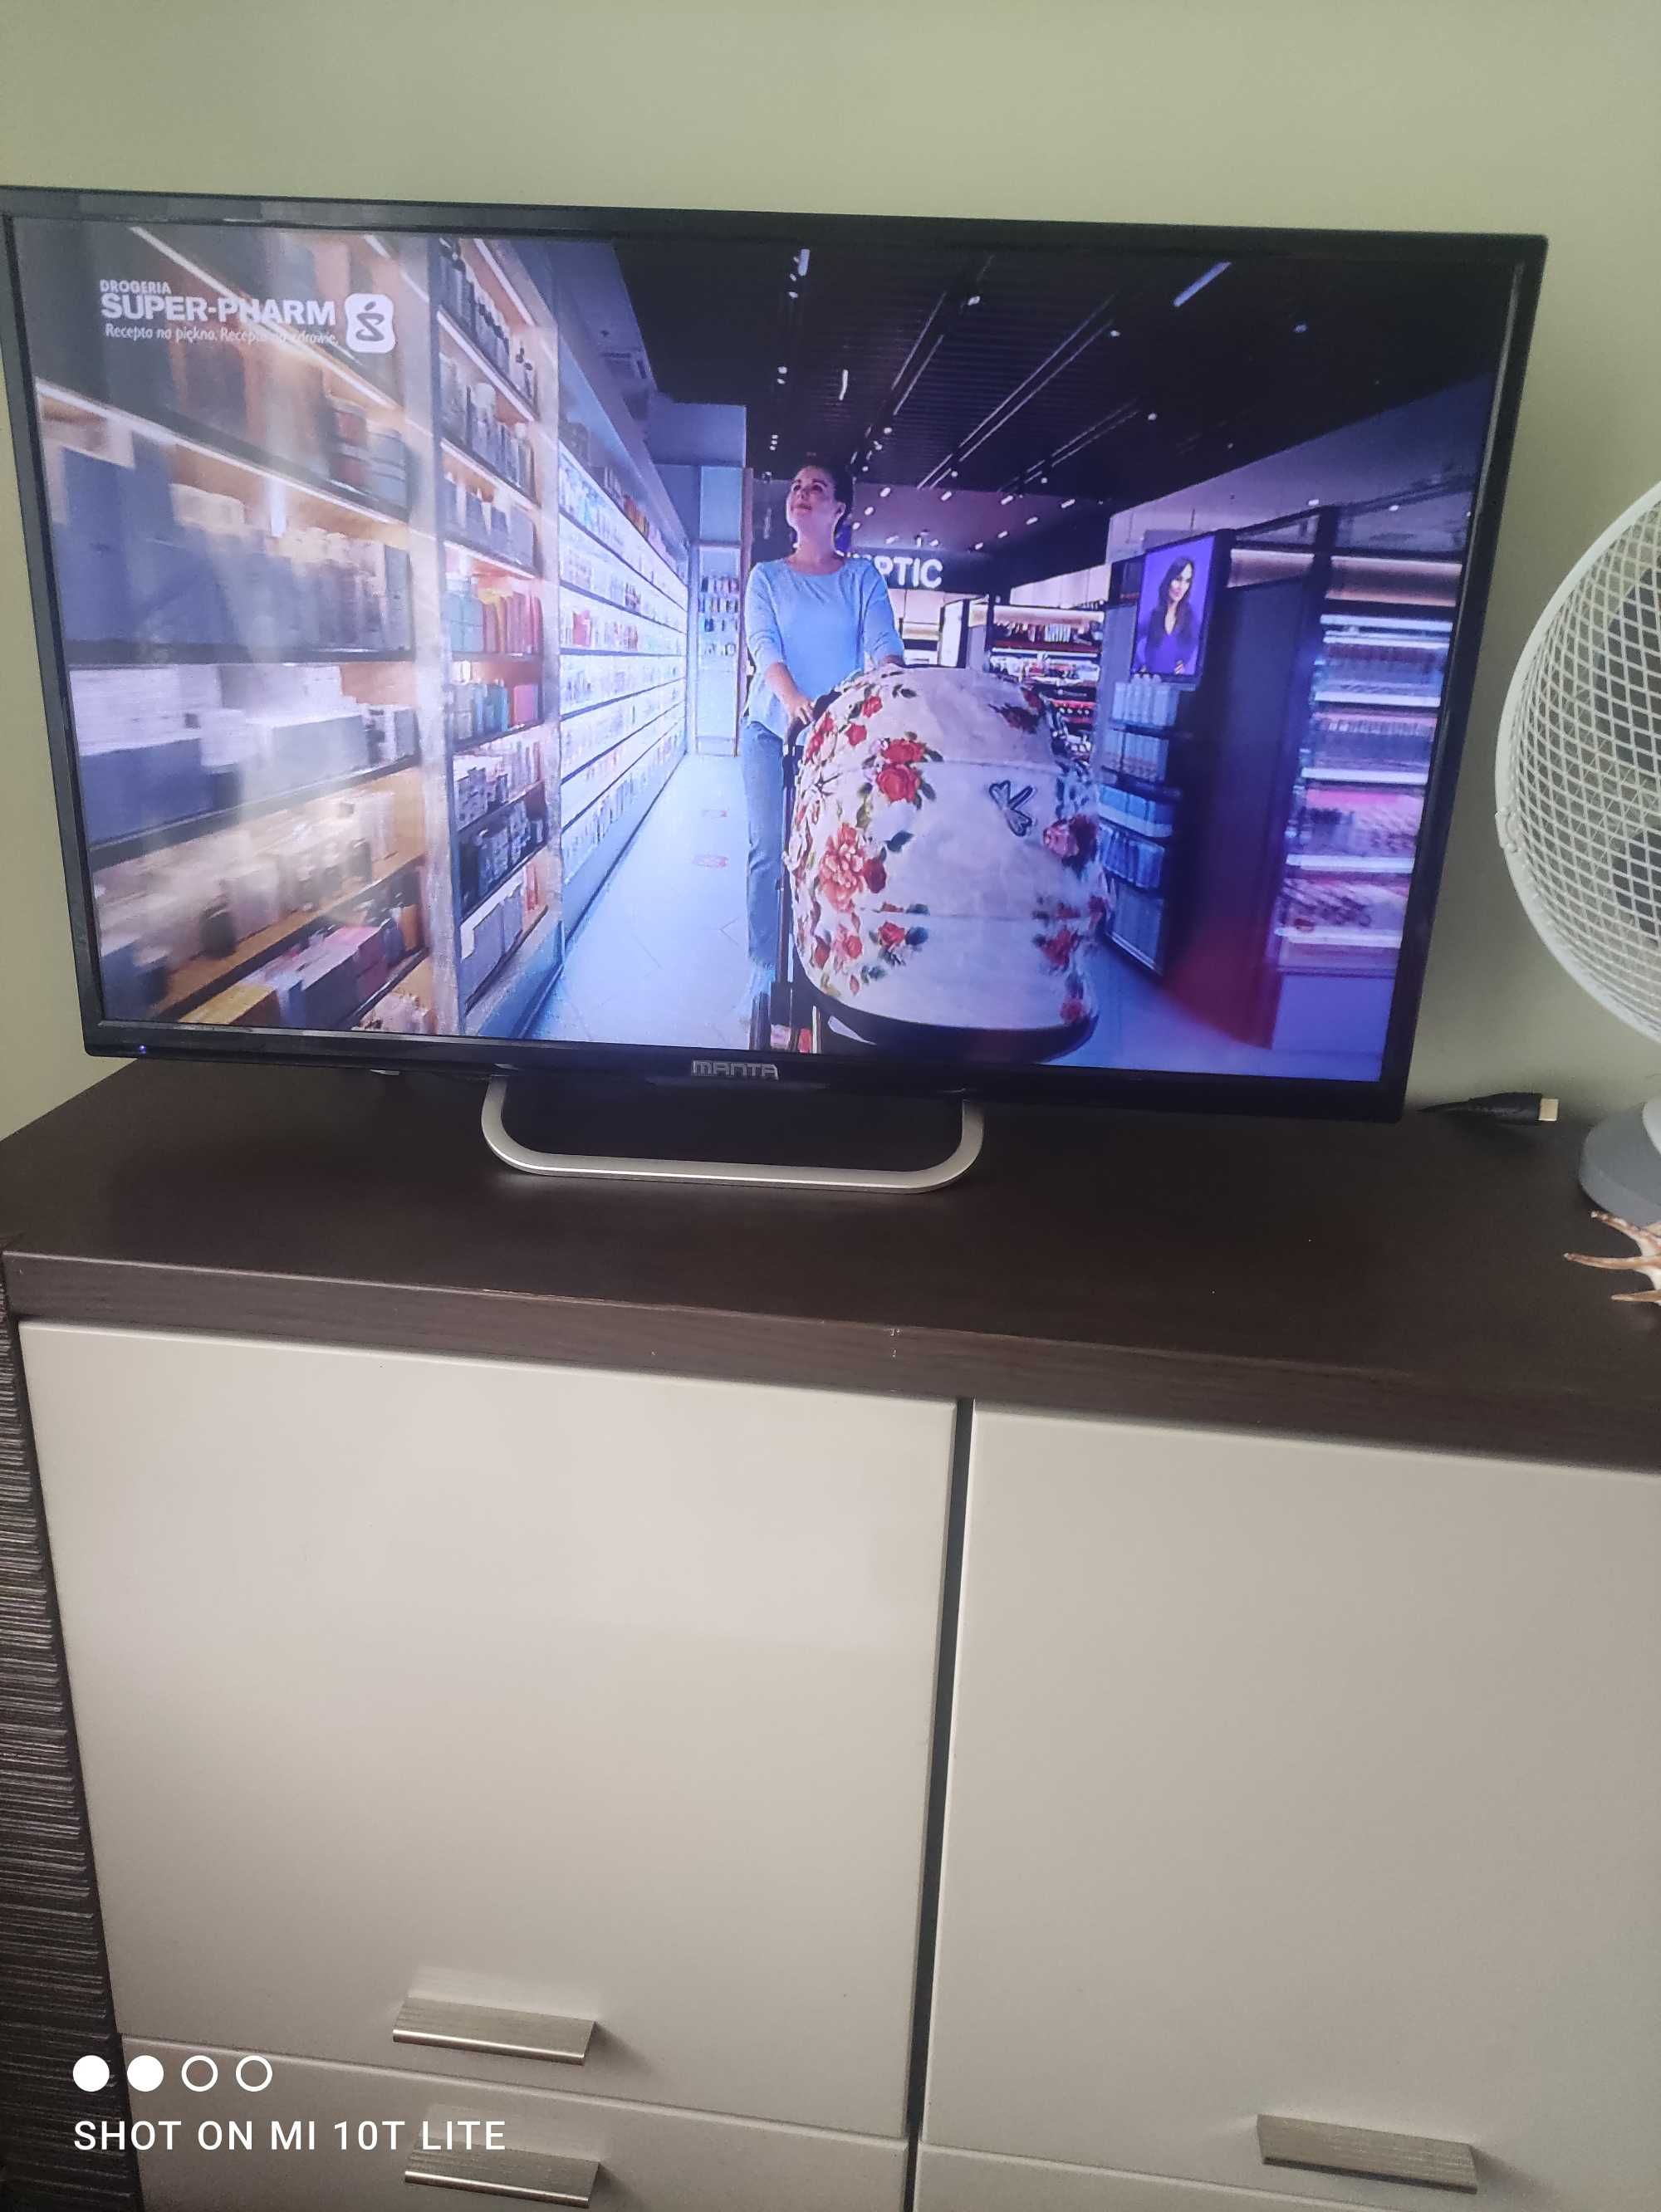 Telewizor LCD Manta przekątna 85 cm